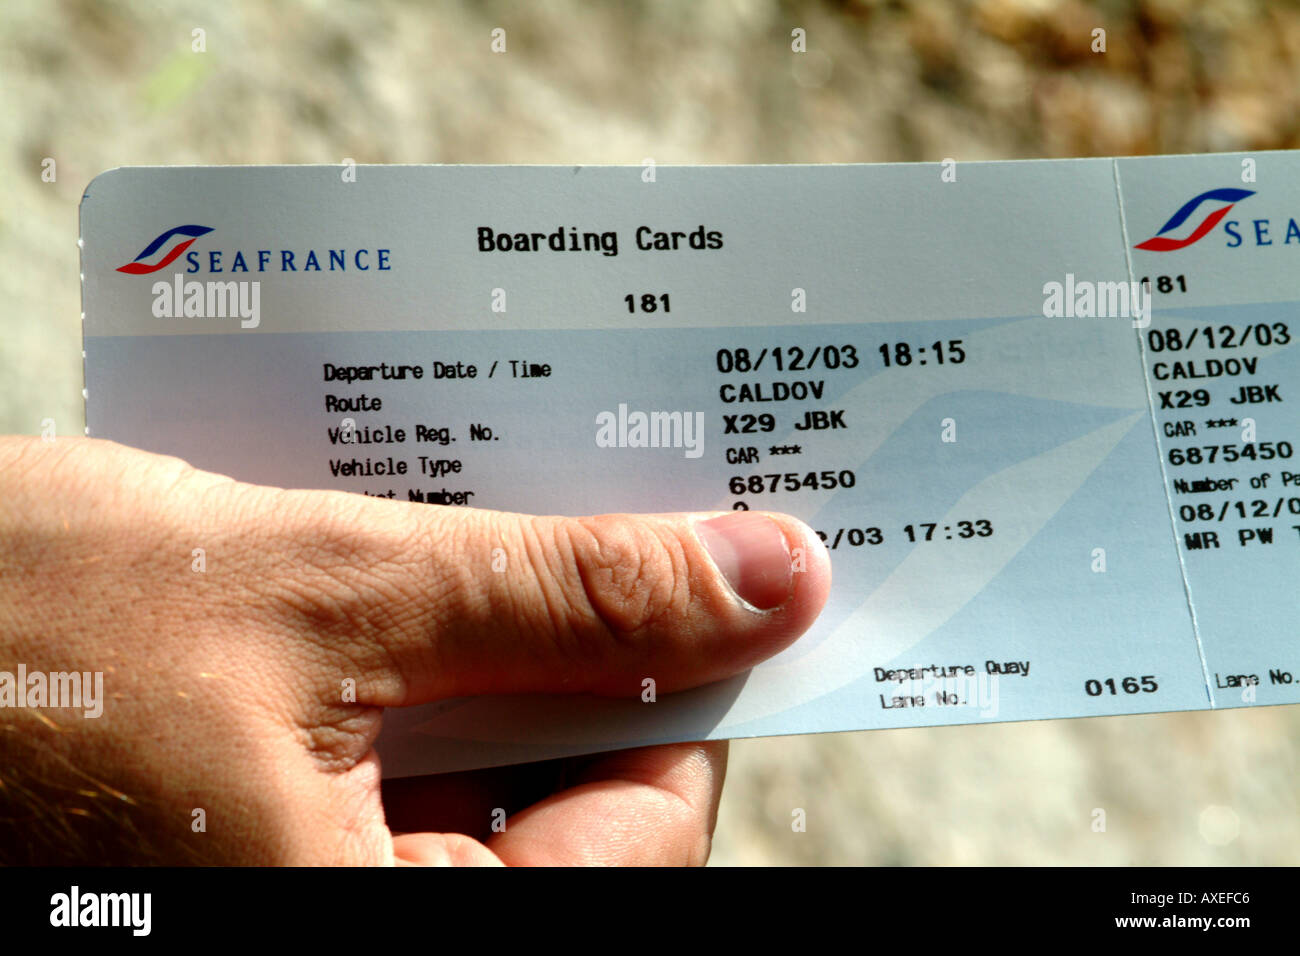 Boarding Card Immagini e Fotos Stock - Alamy